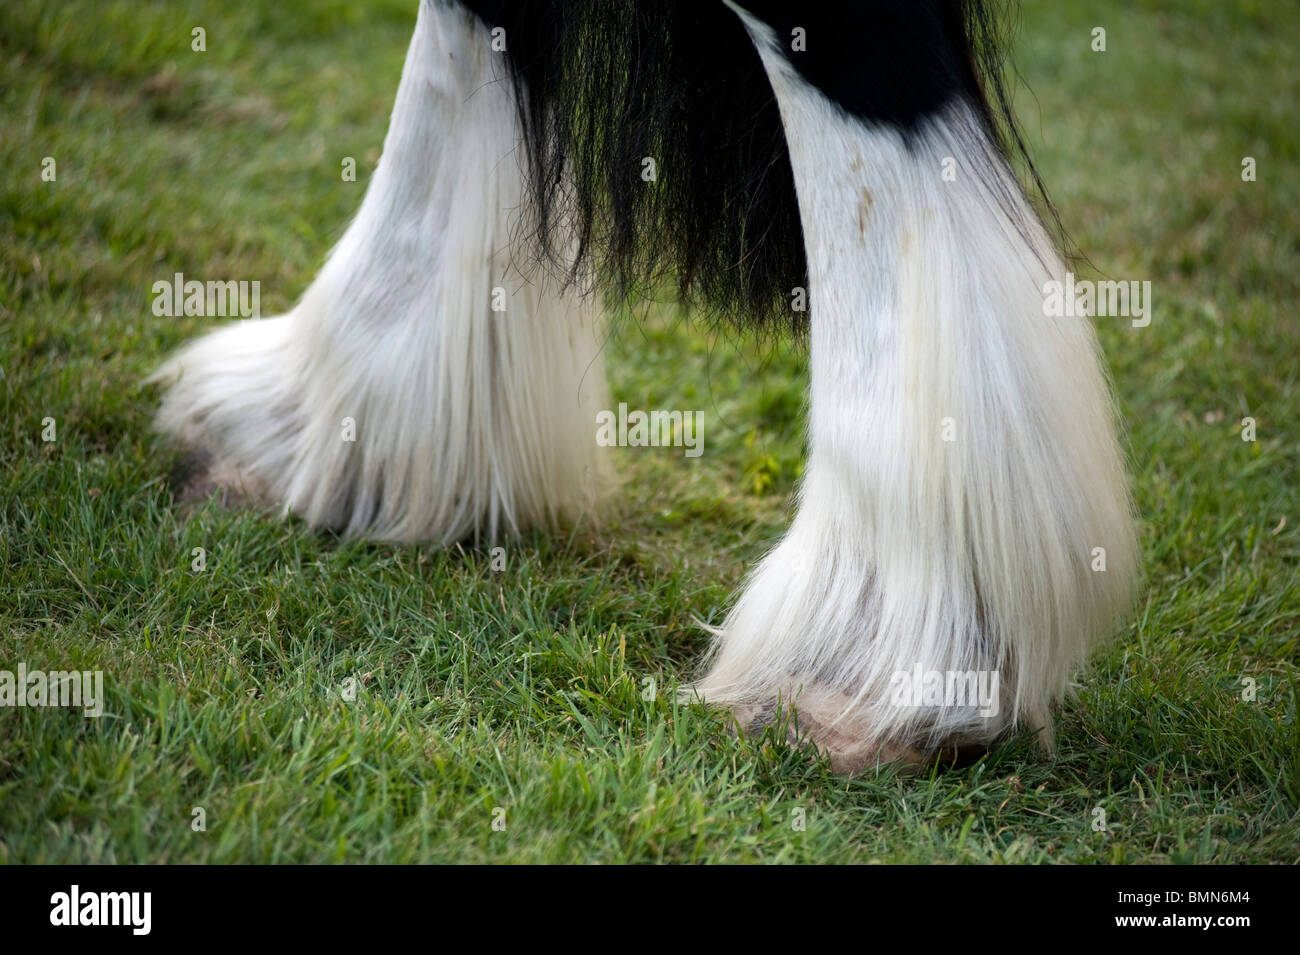 shire horse hooves Stock Photo